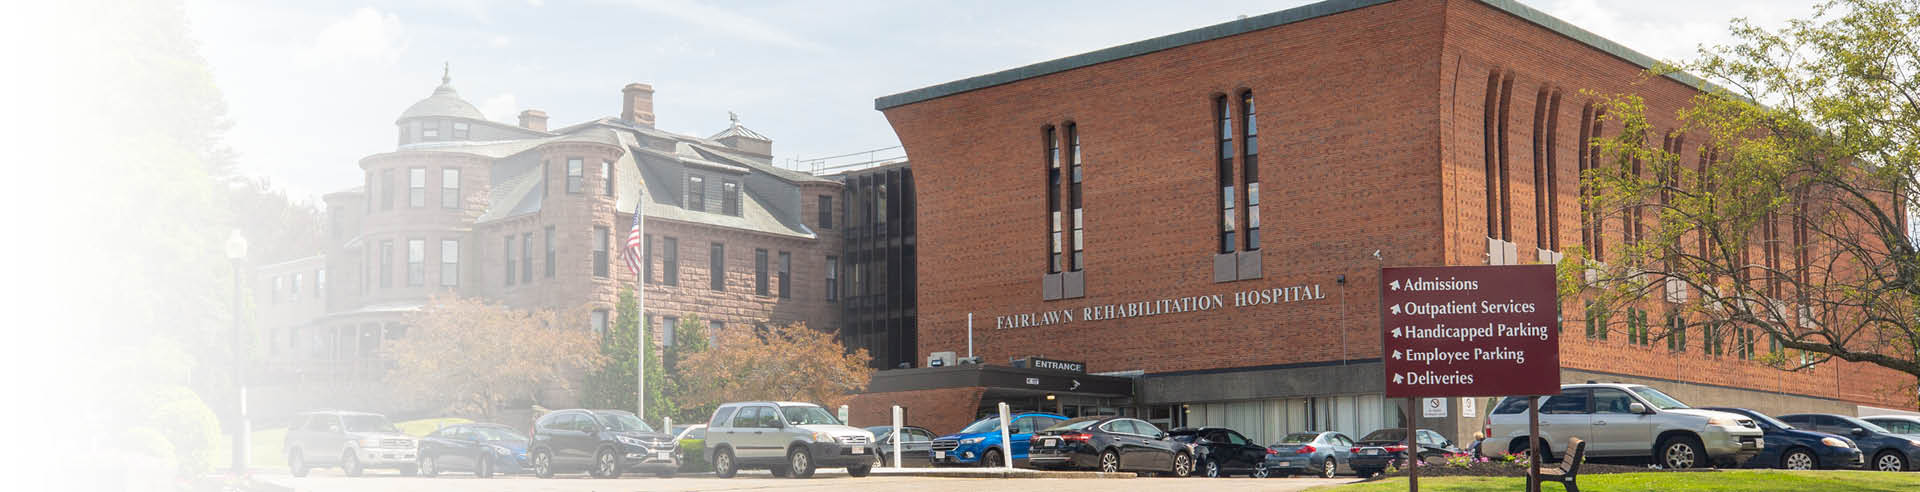 Fairlawn Rehabilitation Hospital, an affiliate of Encompass Health exterior